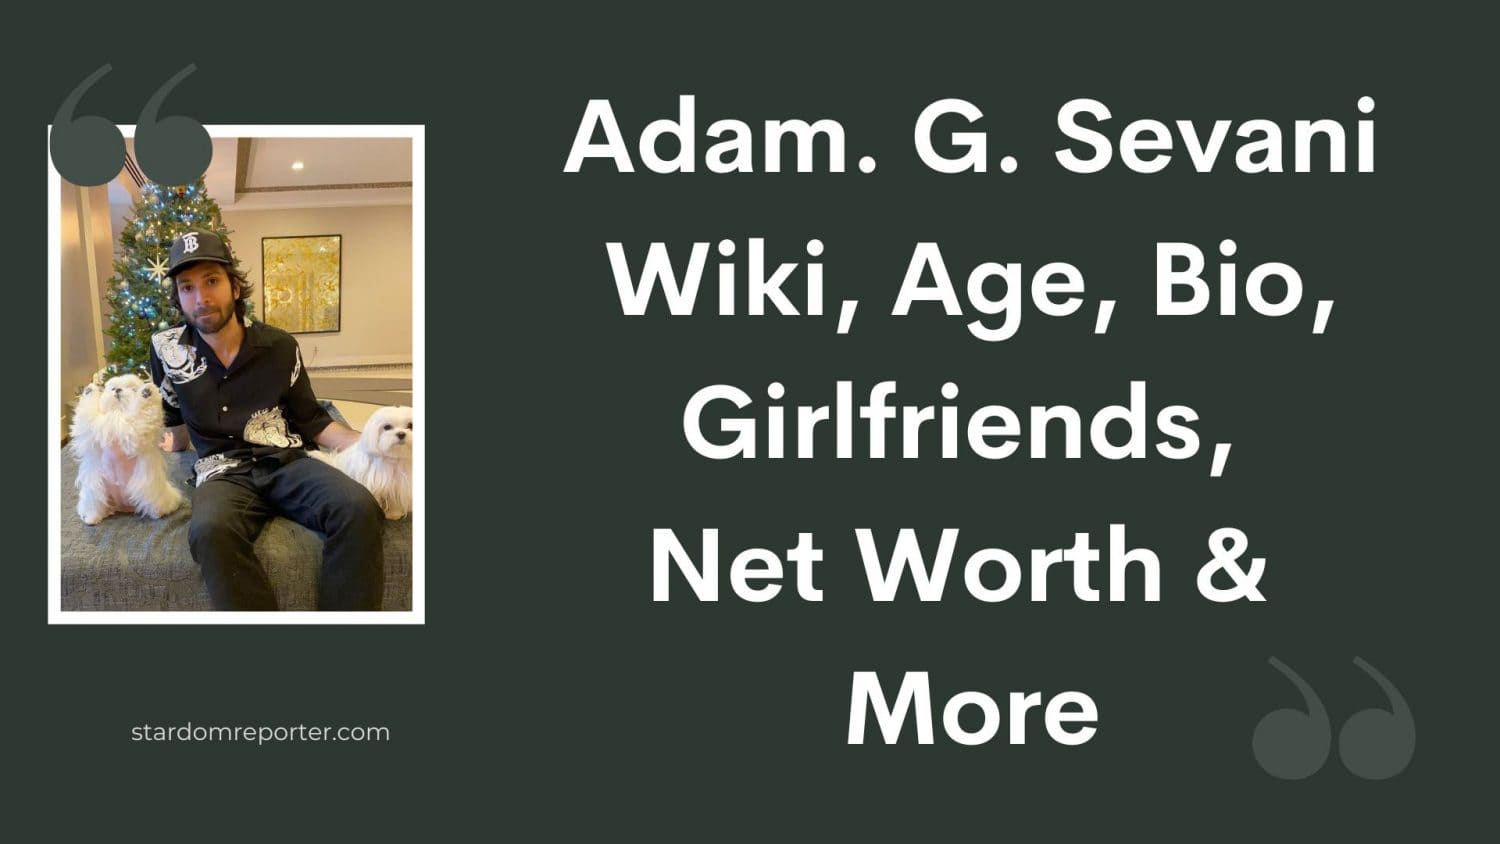 Adam. G. Sevani Wiki, Age, Bio, Girlfriends, Net Worth & More - 9